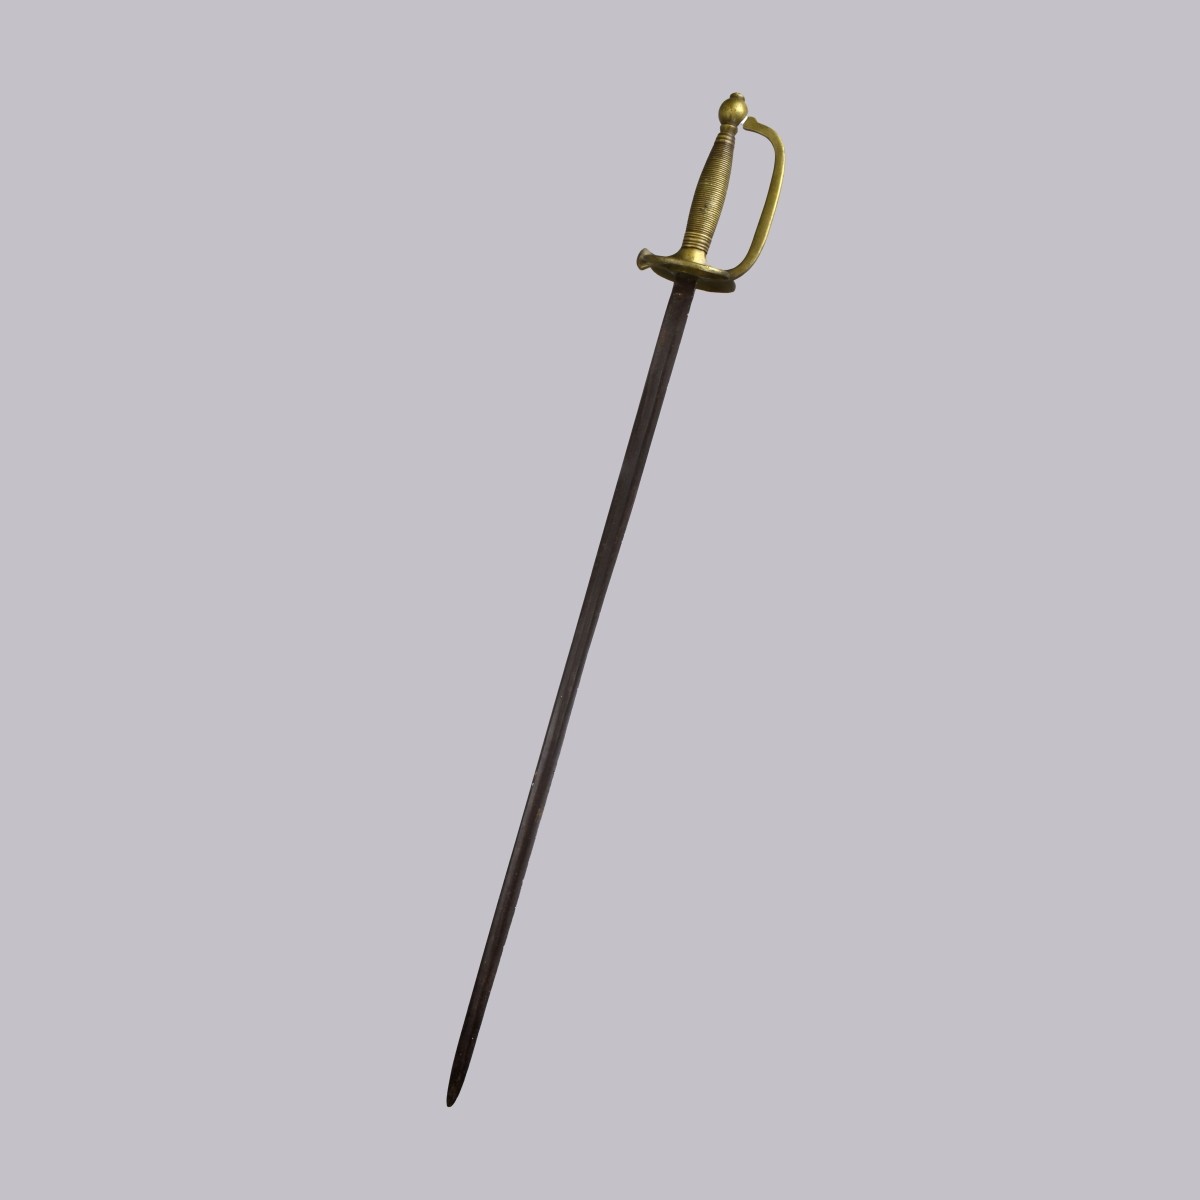 Circa 1860s U.S. Marine Sword